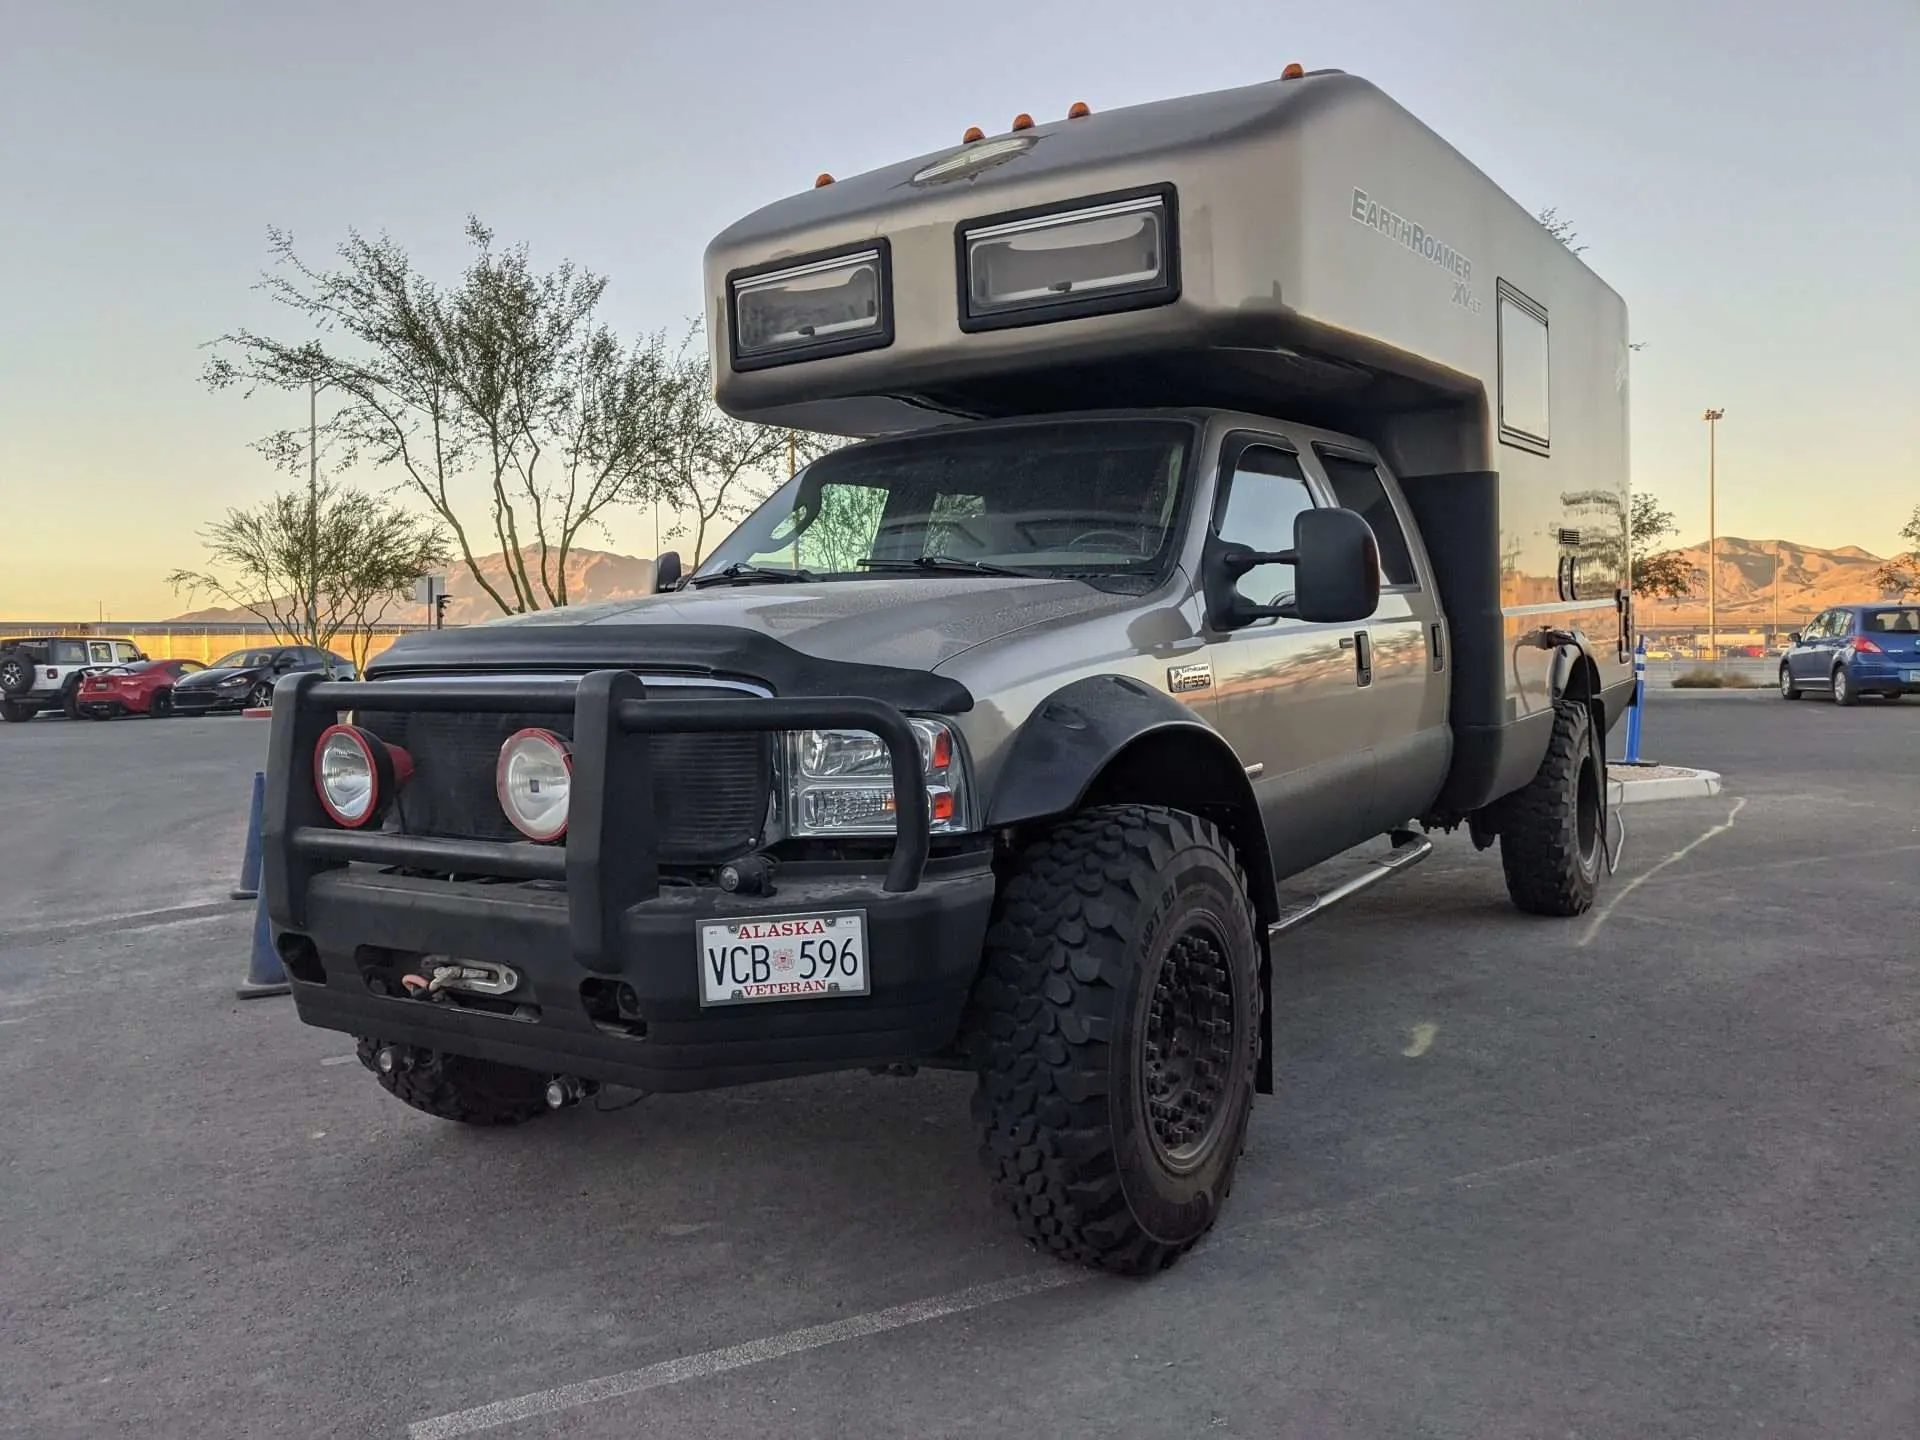 Truck camper parked in parking lot with heavy duty Buckstop bumper installed.